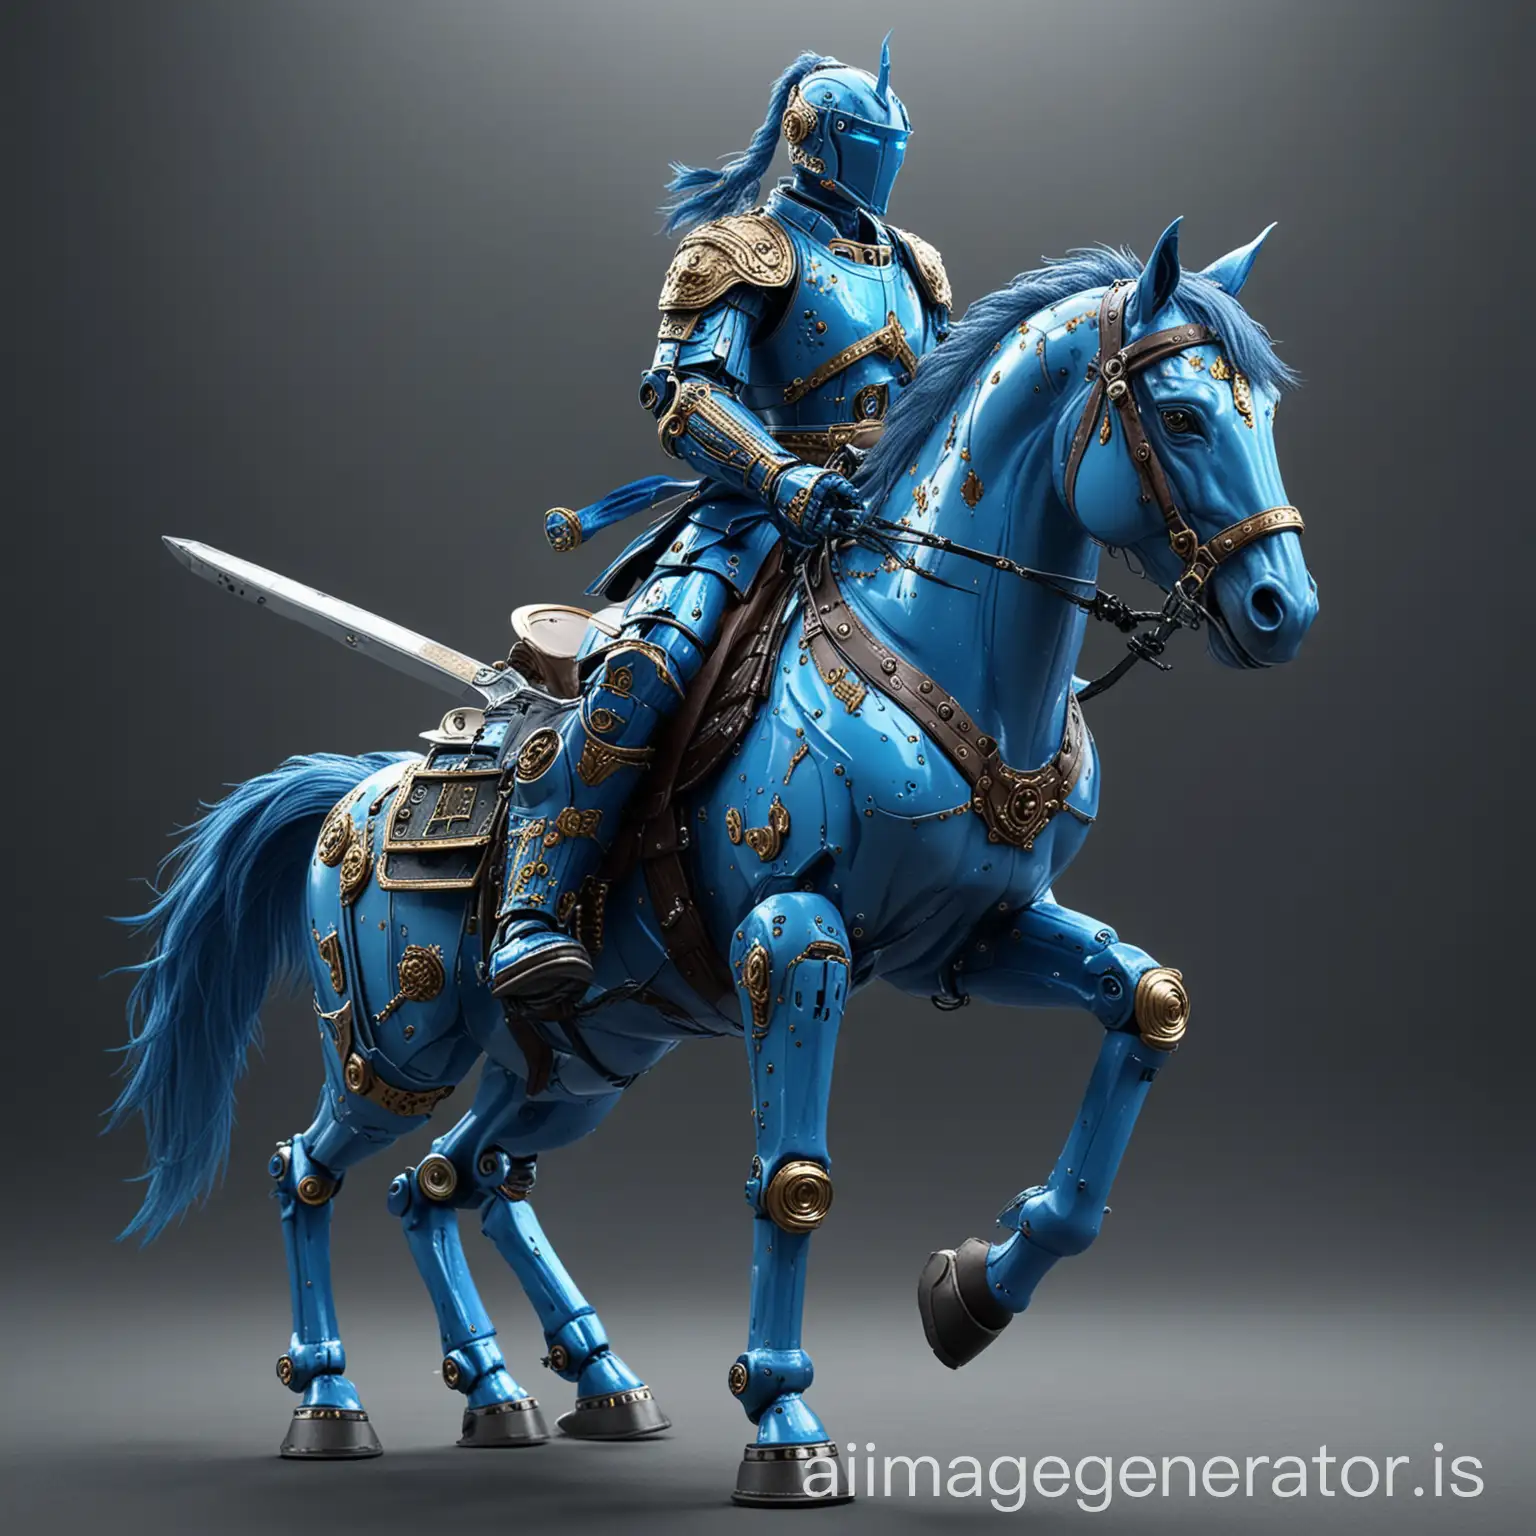 Blue-Money-Robot-Riding-a-Horse-with-a-Sword